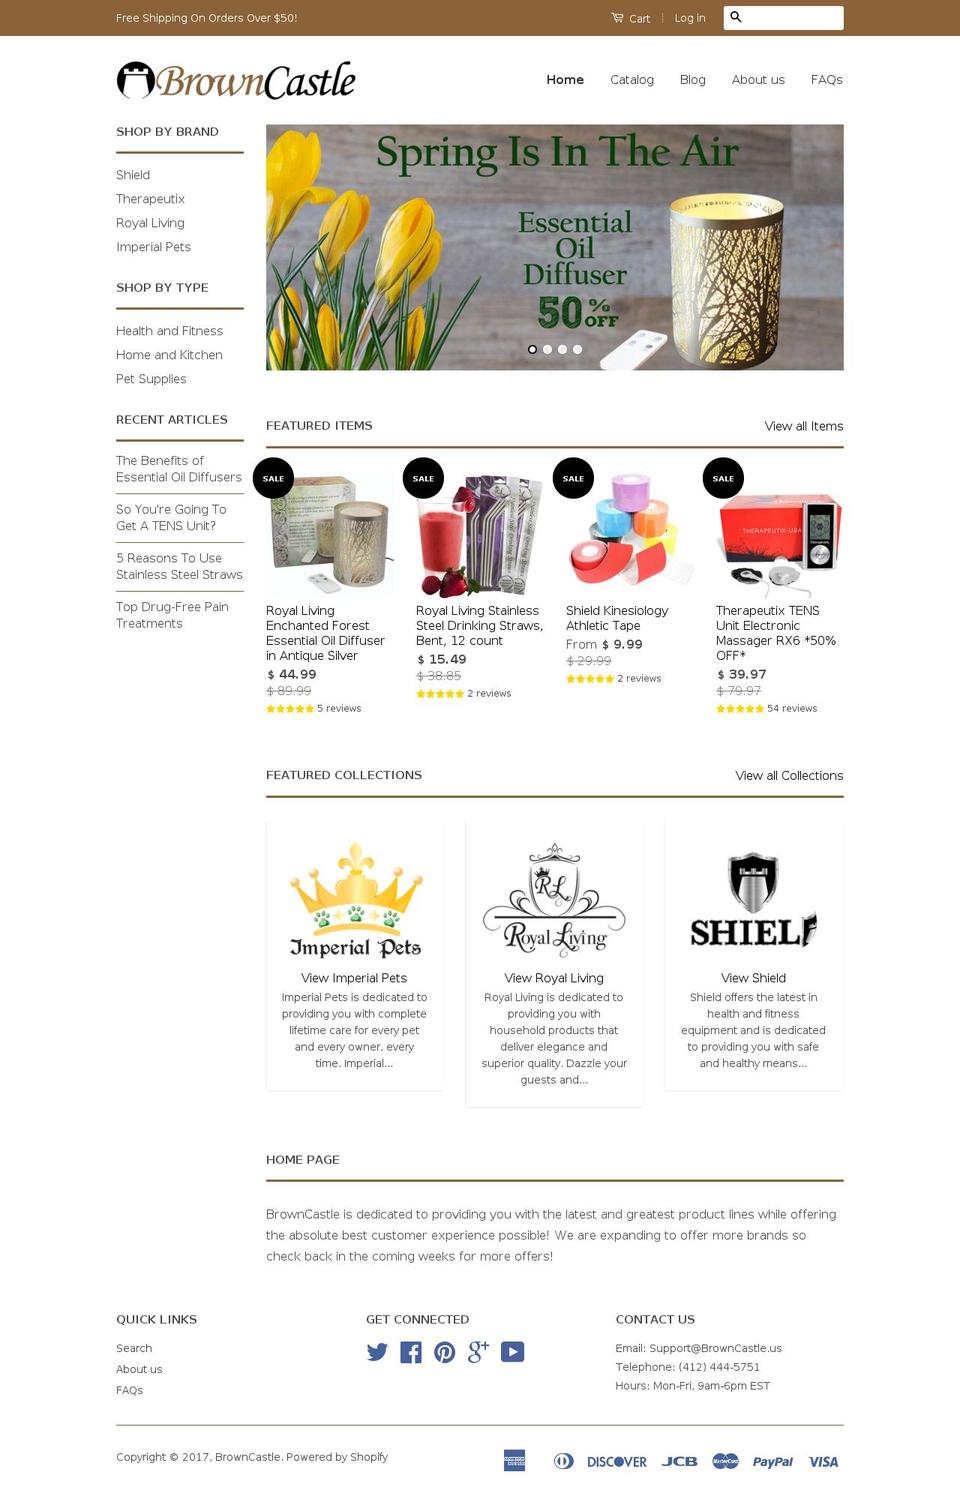 Wokiee Shopify theme site example browncastle.us